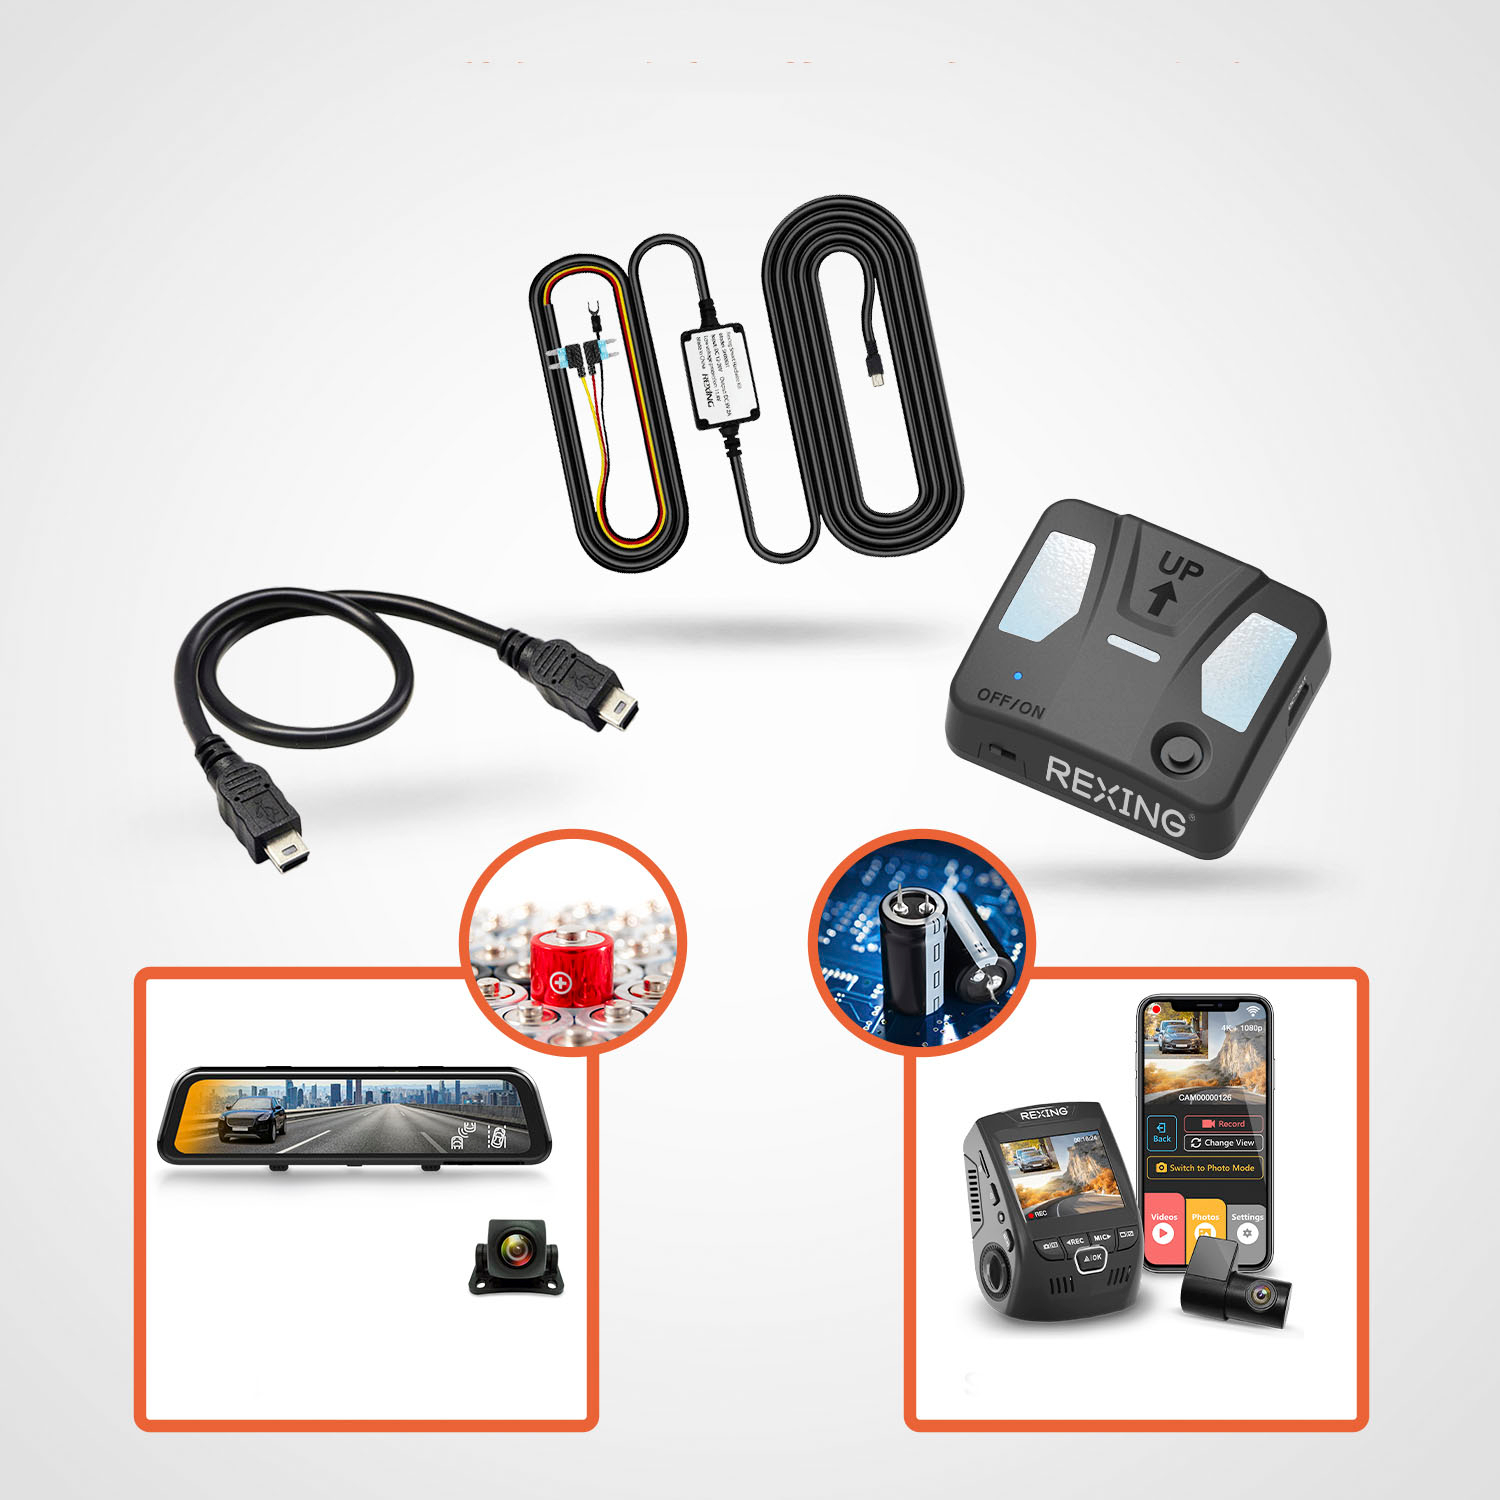 Rexing Smart Hardwire Kit Type-C Port for R4 Dash Cam Black BBY-TYPEC-SHWK  - Best Buy